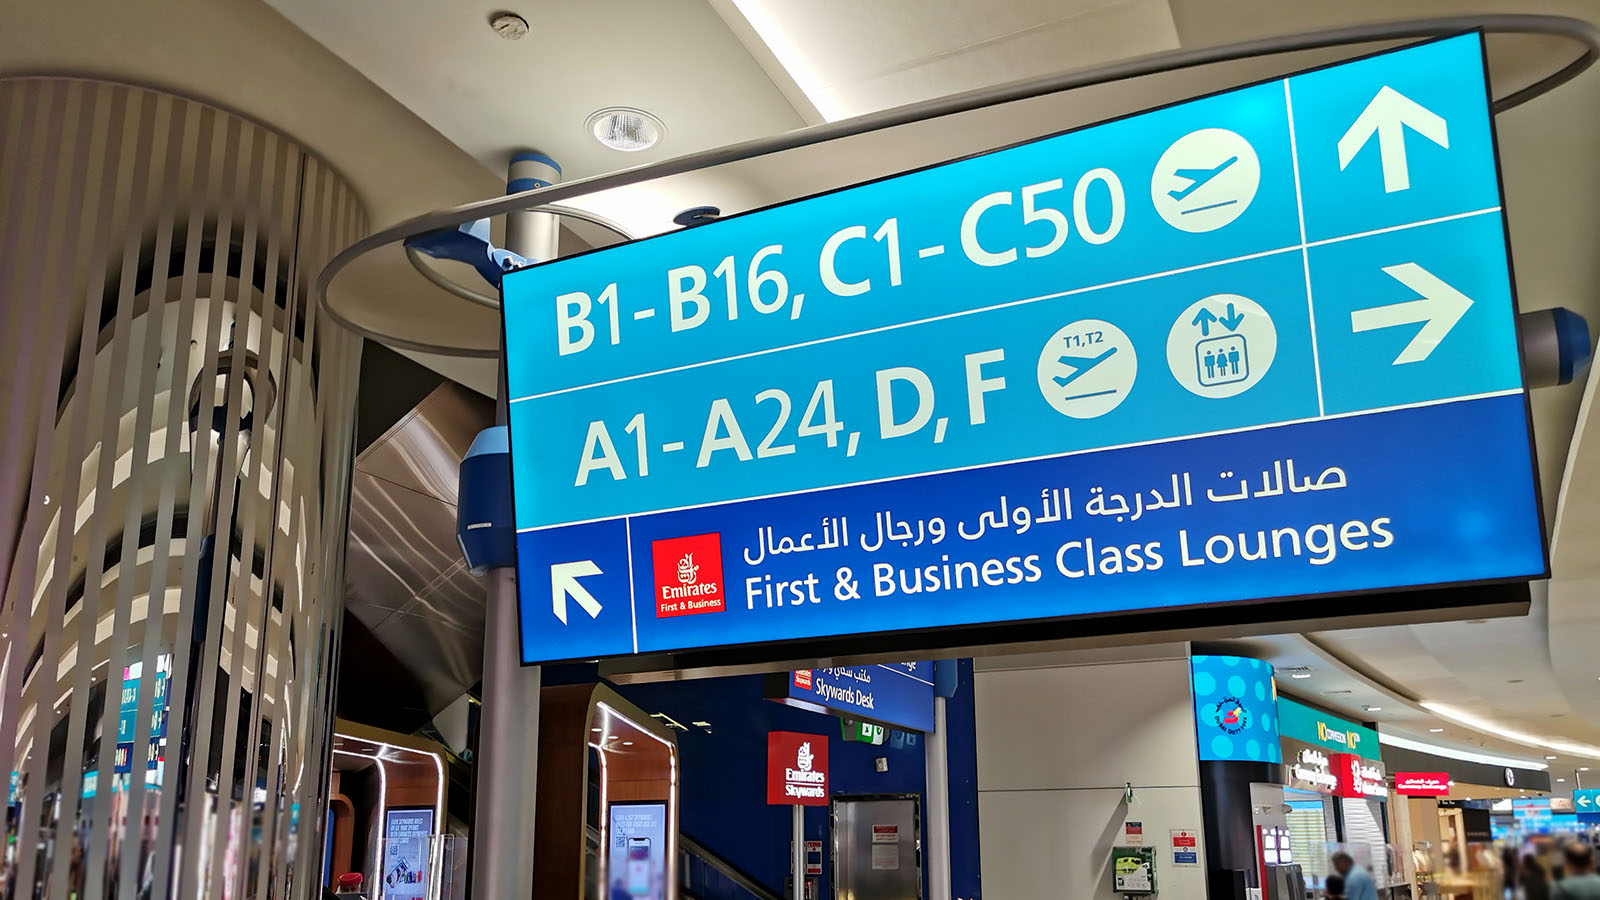 Finding the Emirates Business Class Lounge Dubai T3, Concourse B